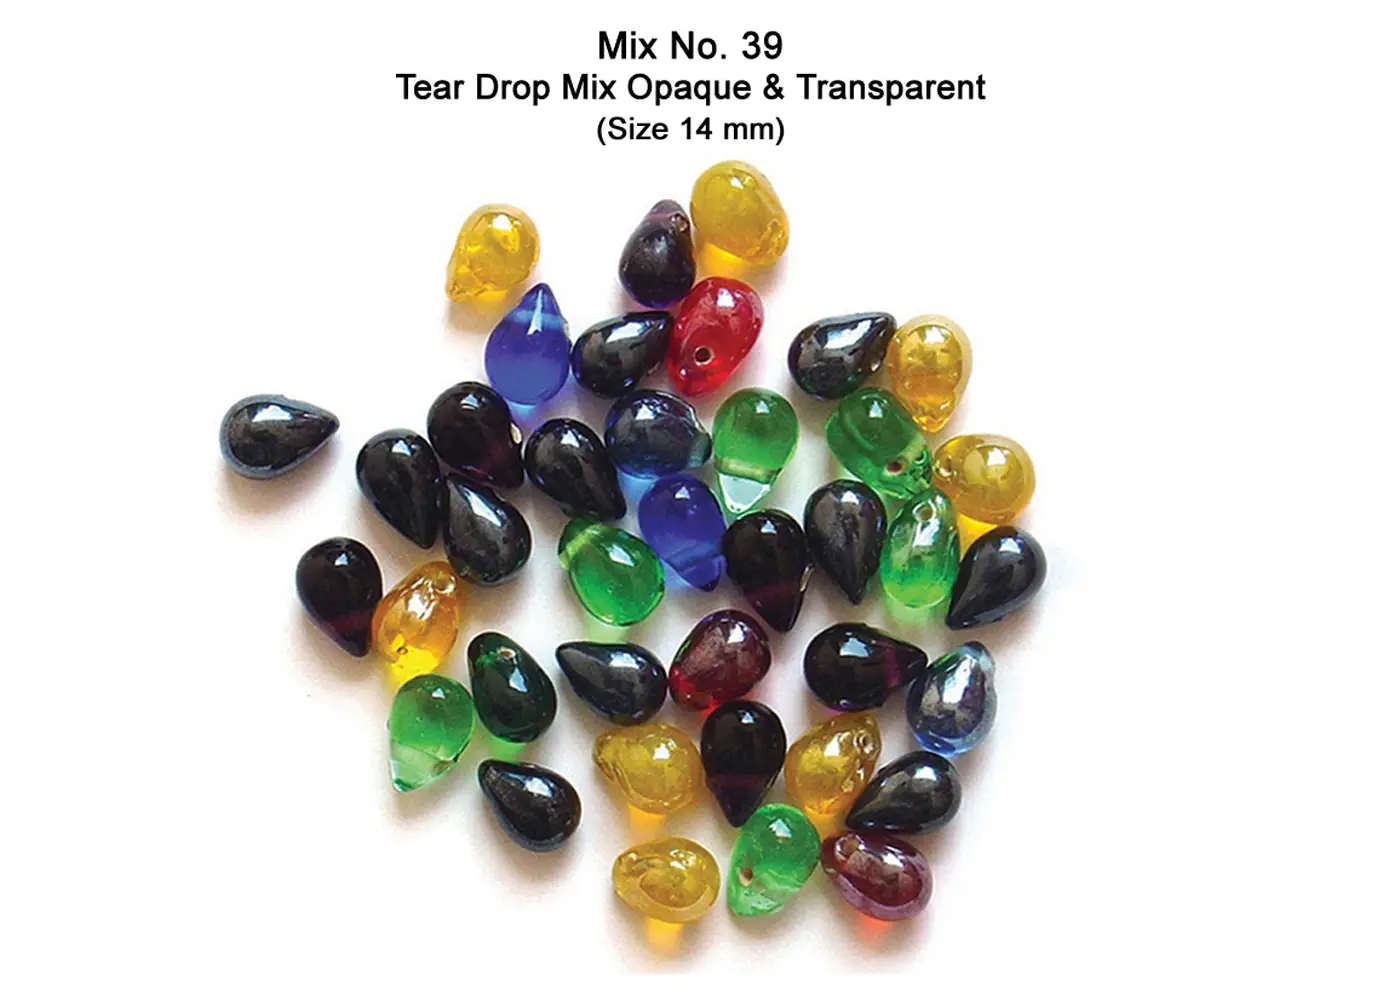 Tear Drop Mix Opaque & Transparent Size 14 mm